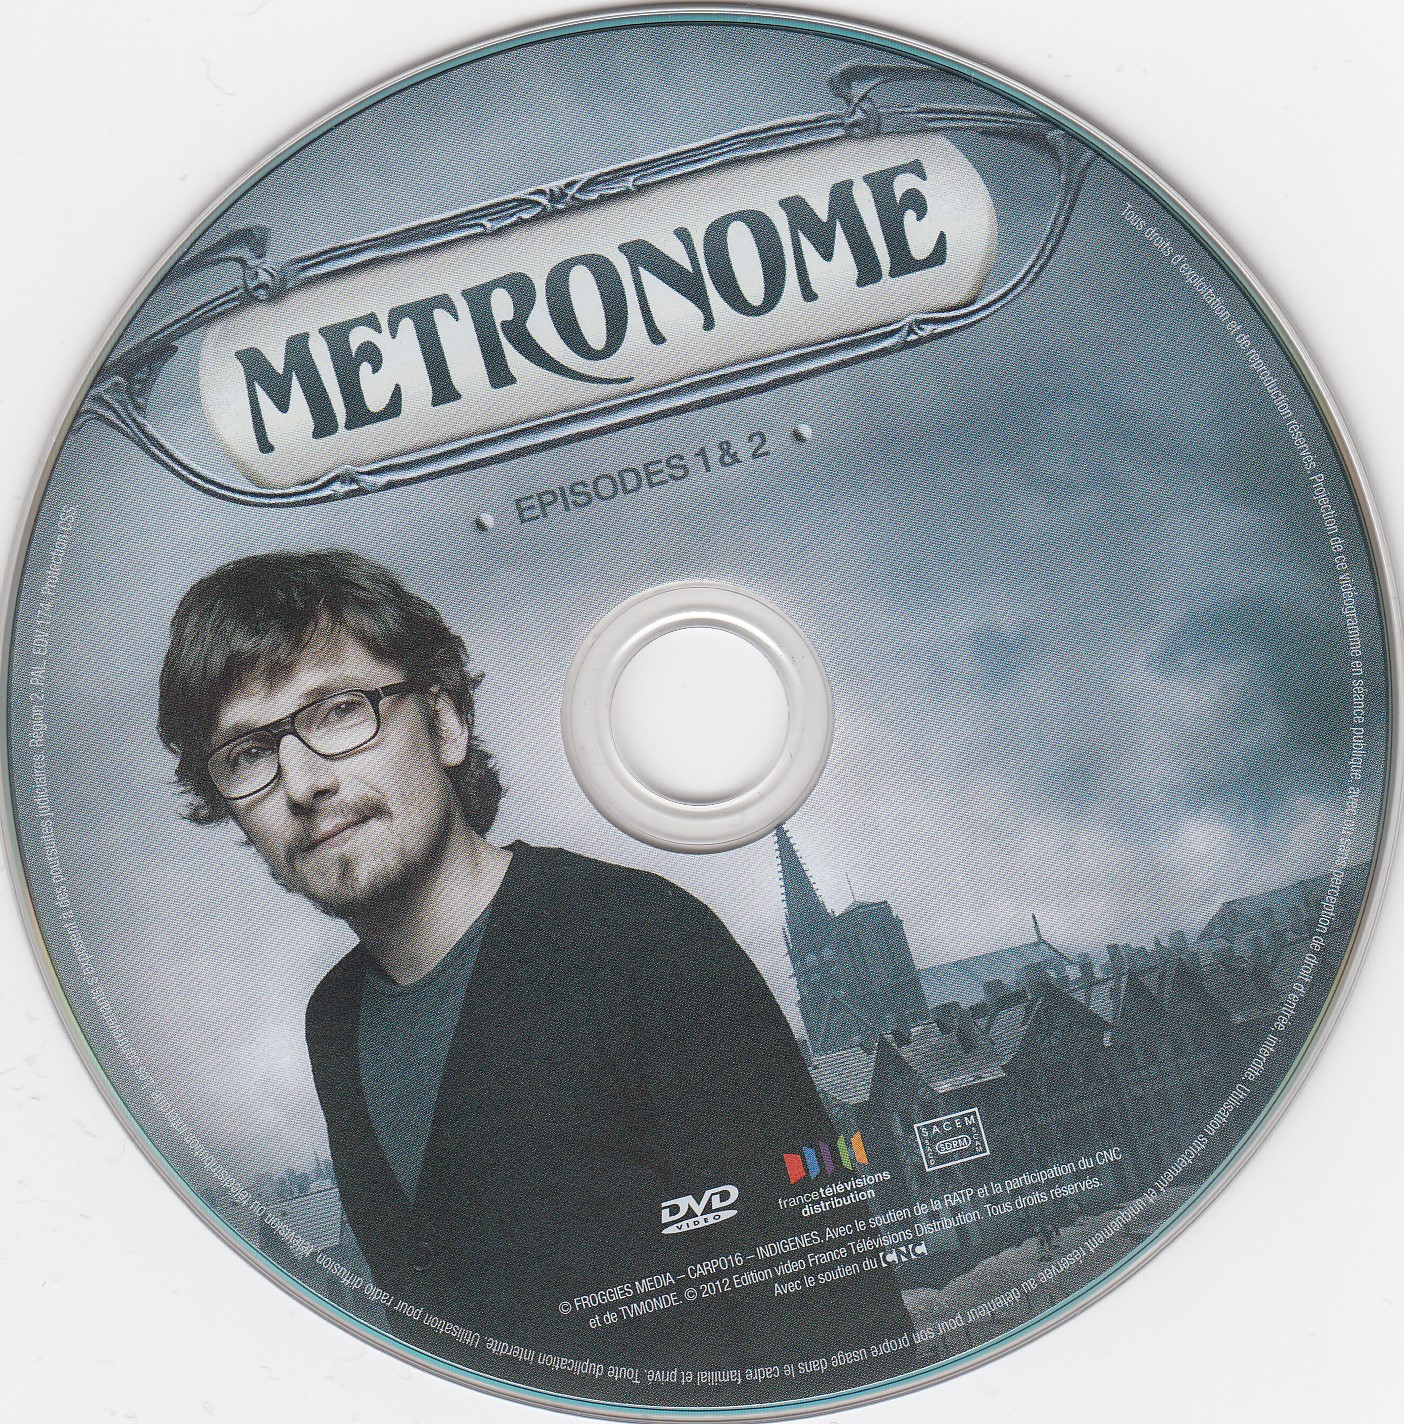 Metronome DISC 1